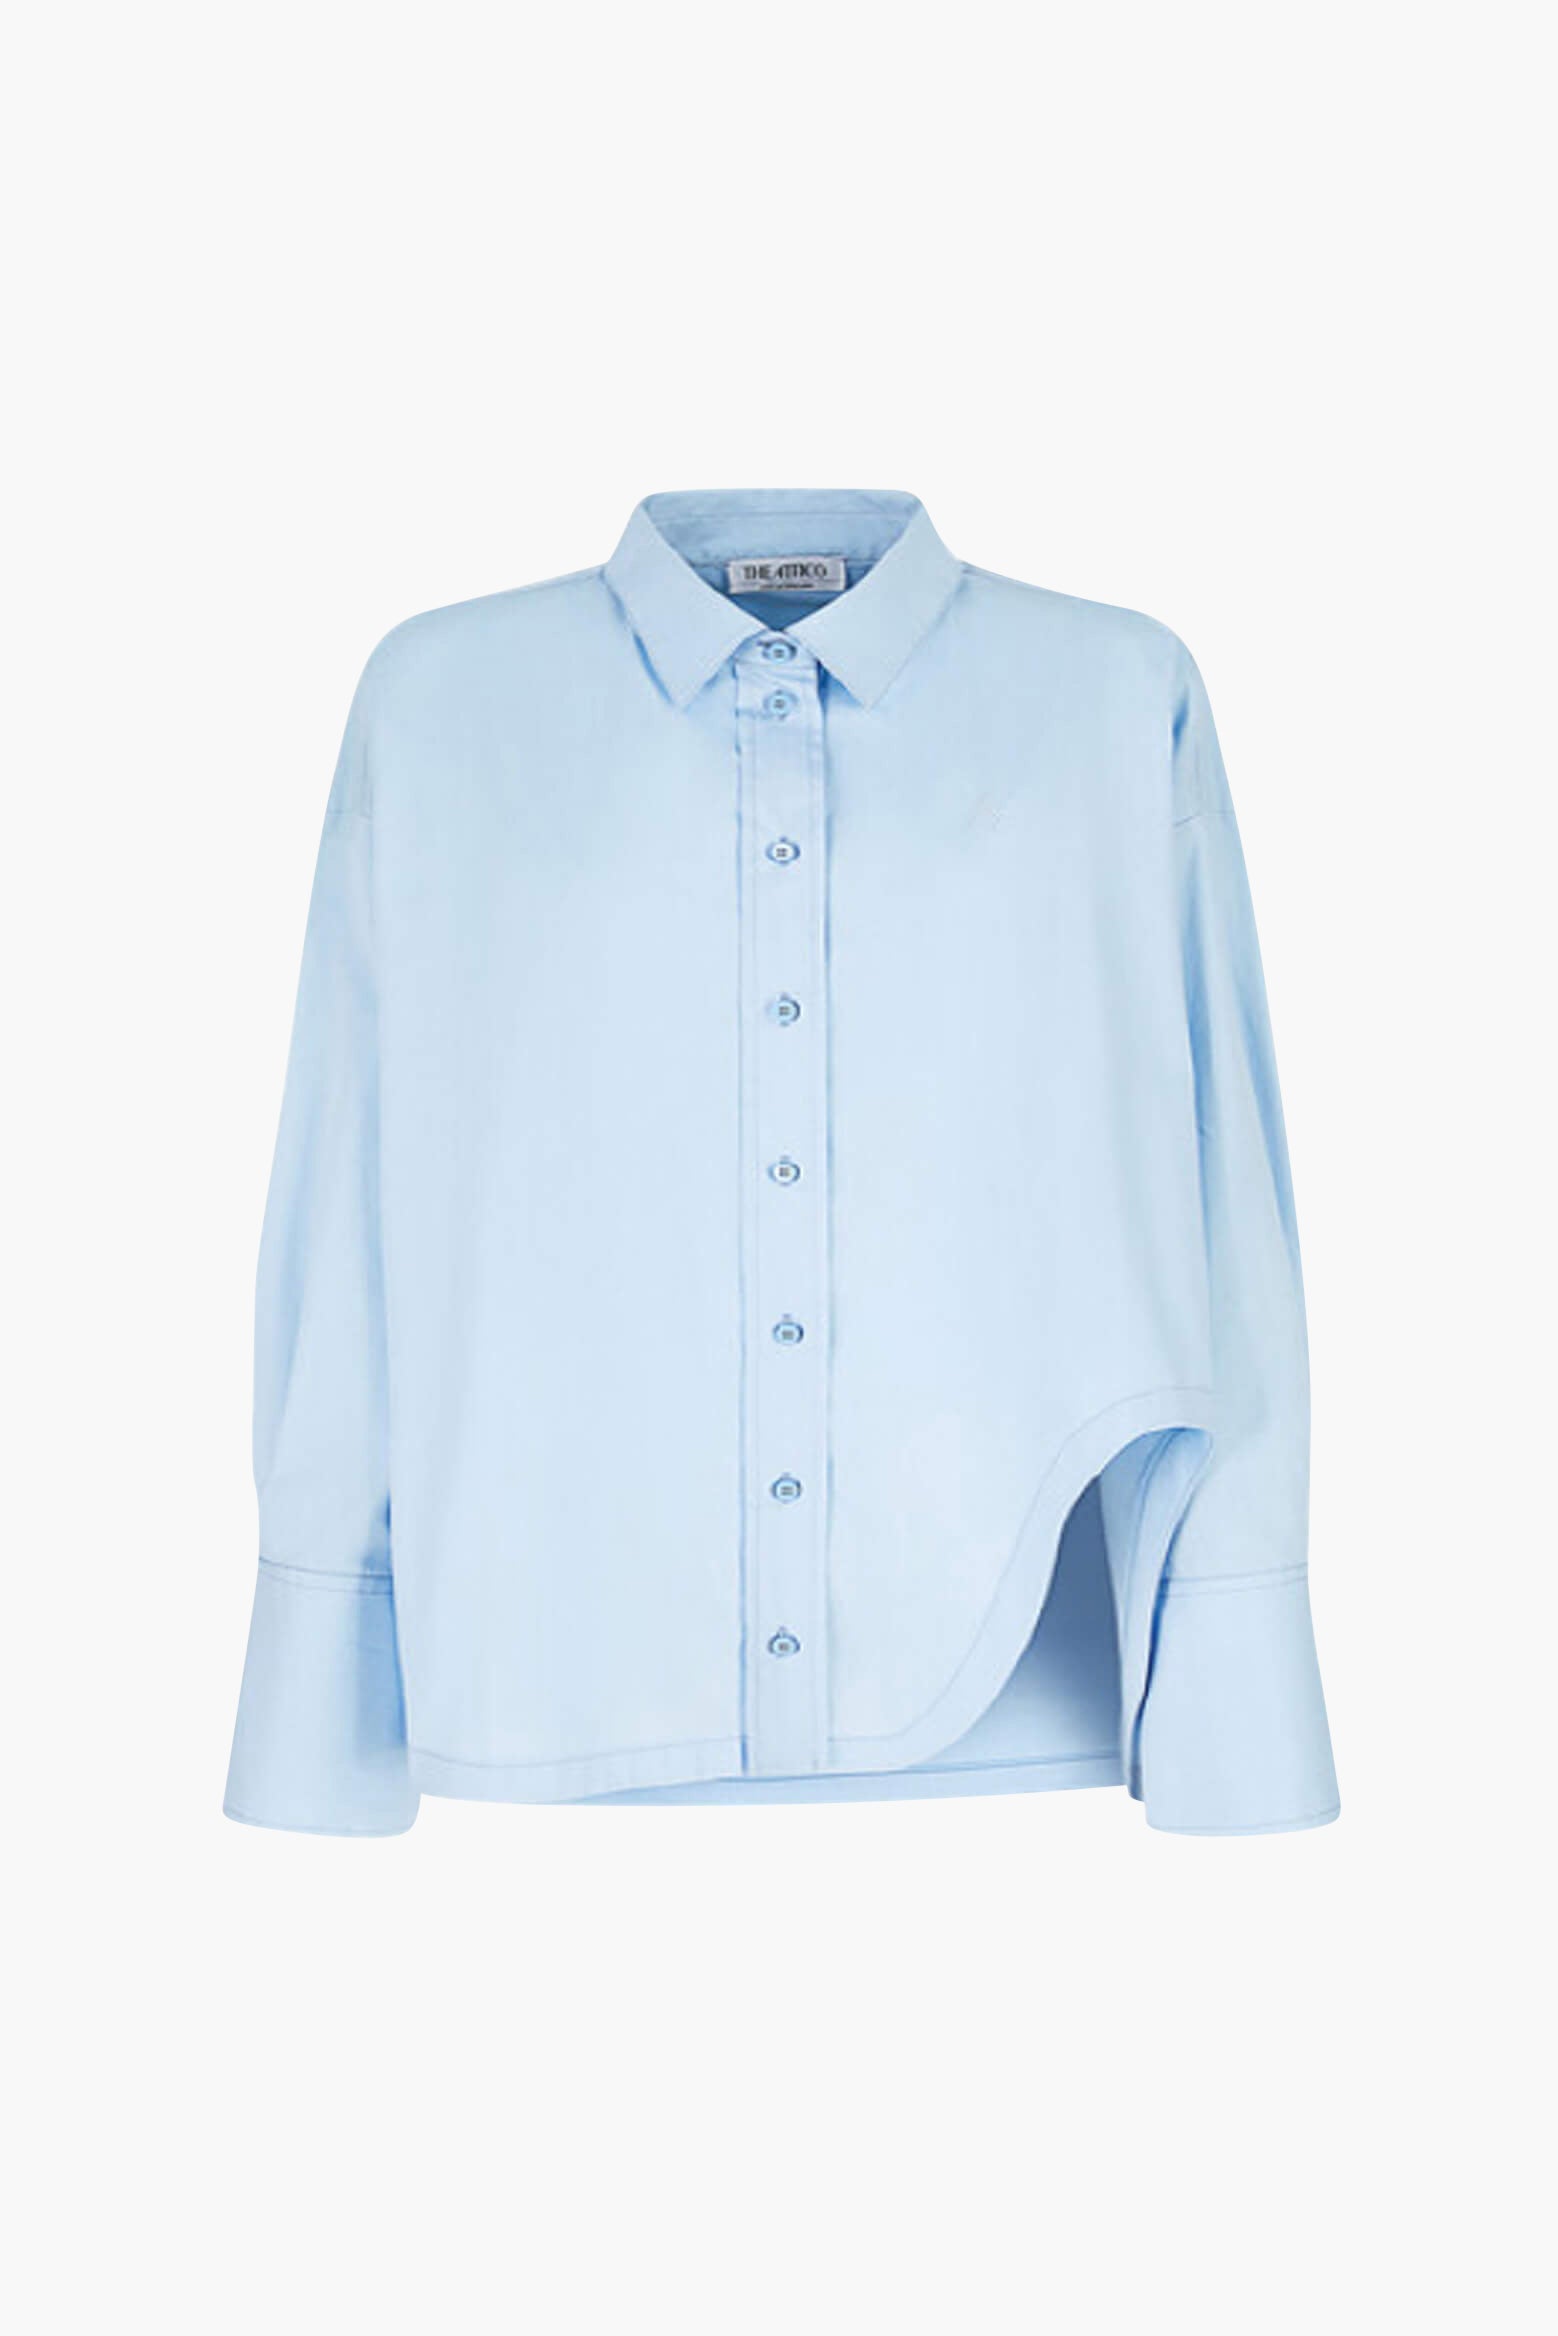 The-Attico-Diana-Shirt-Dusty-Blue-The-New-Trend